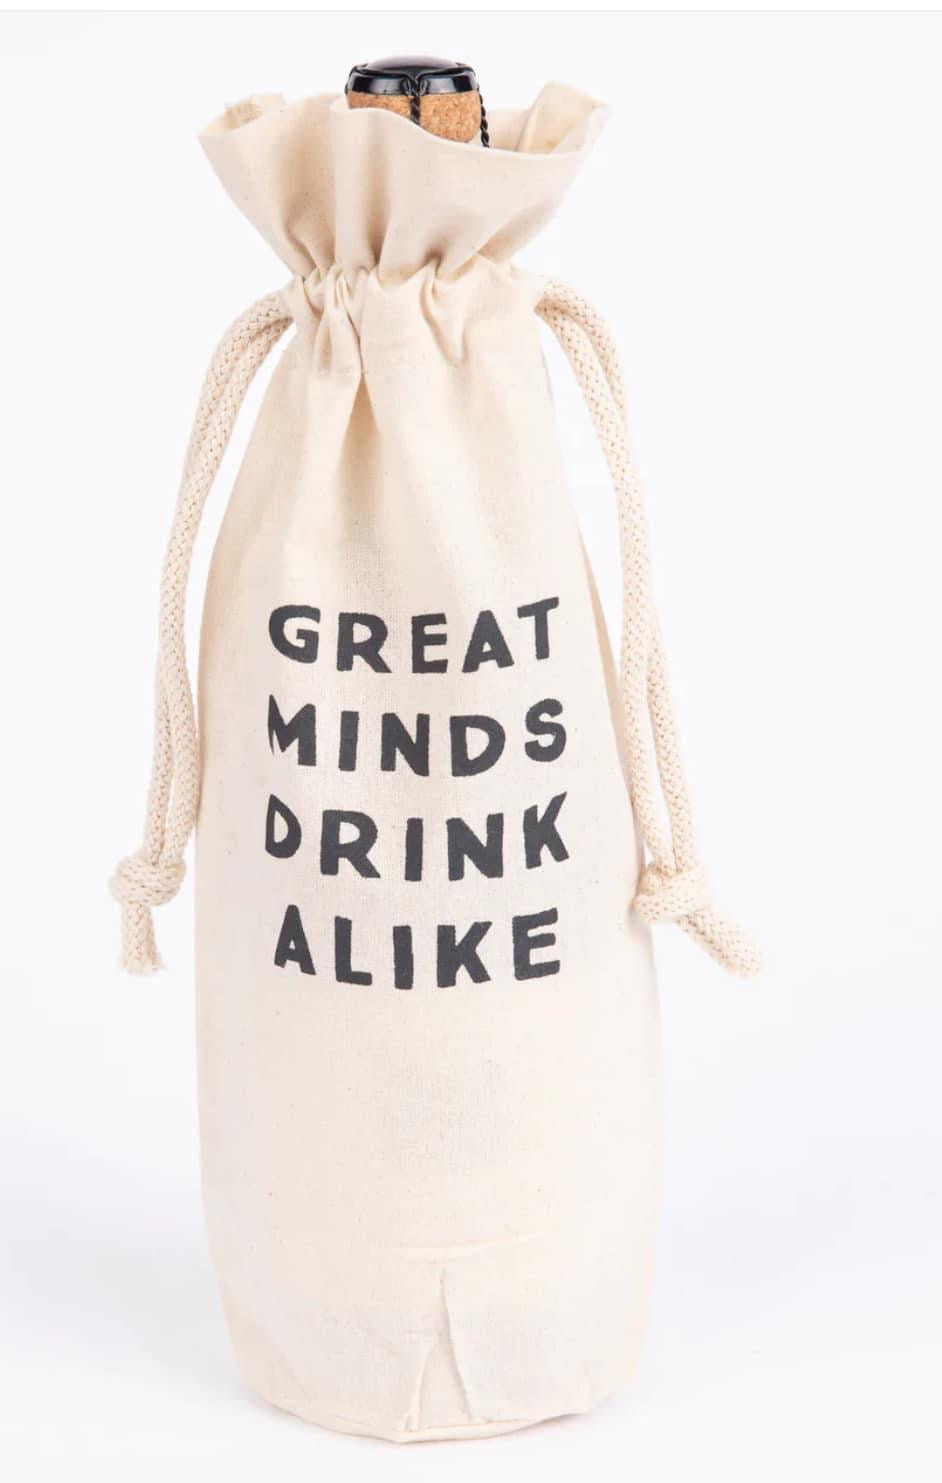 Wine bottle bag